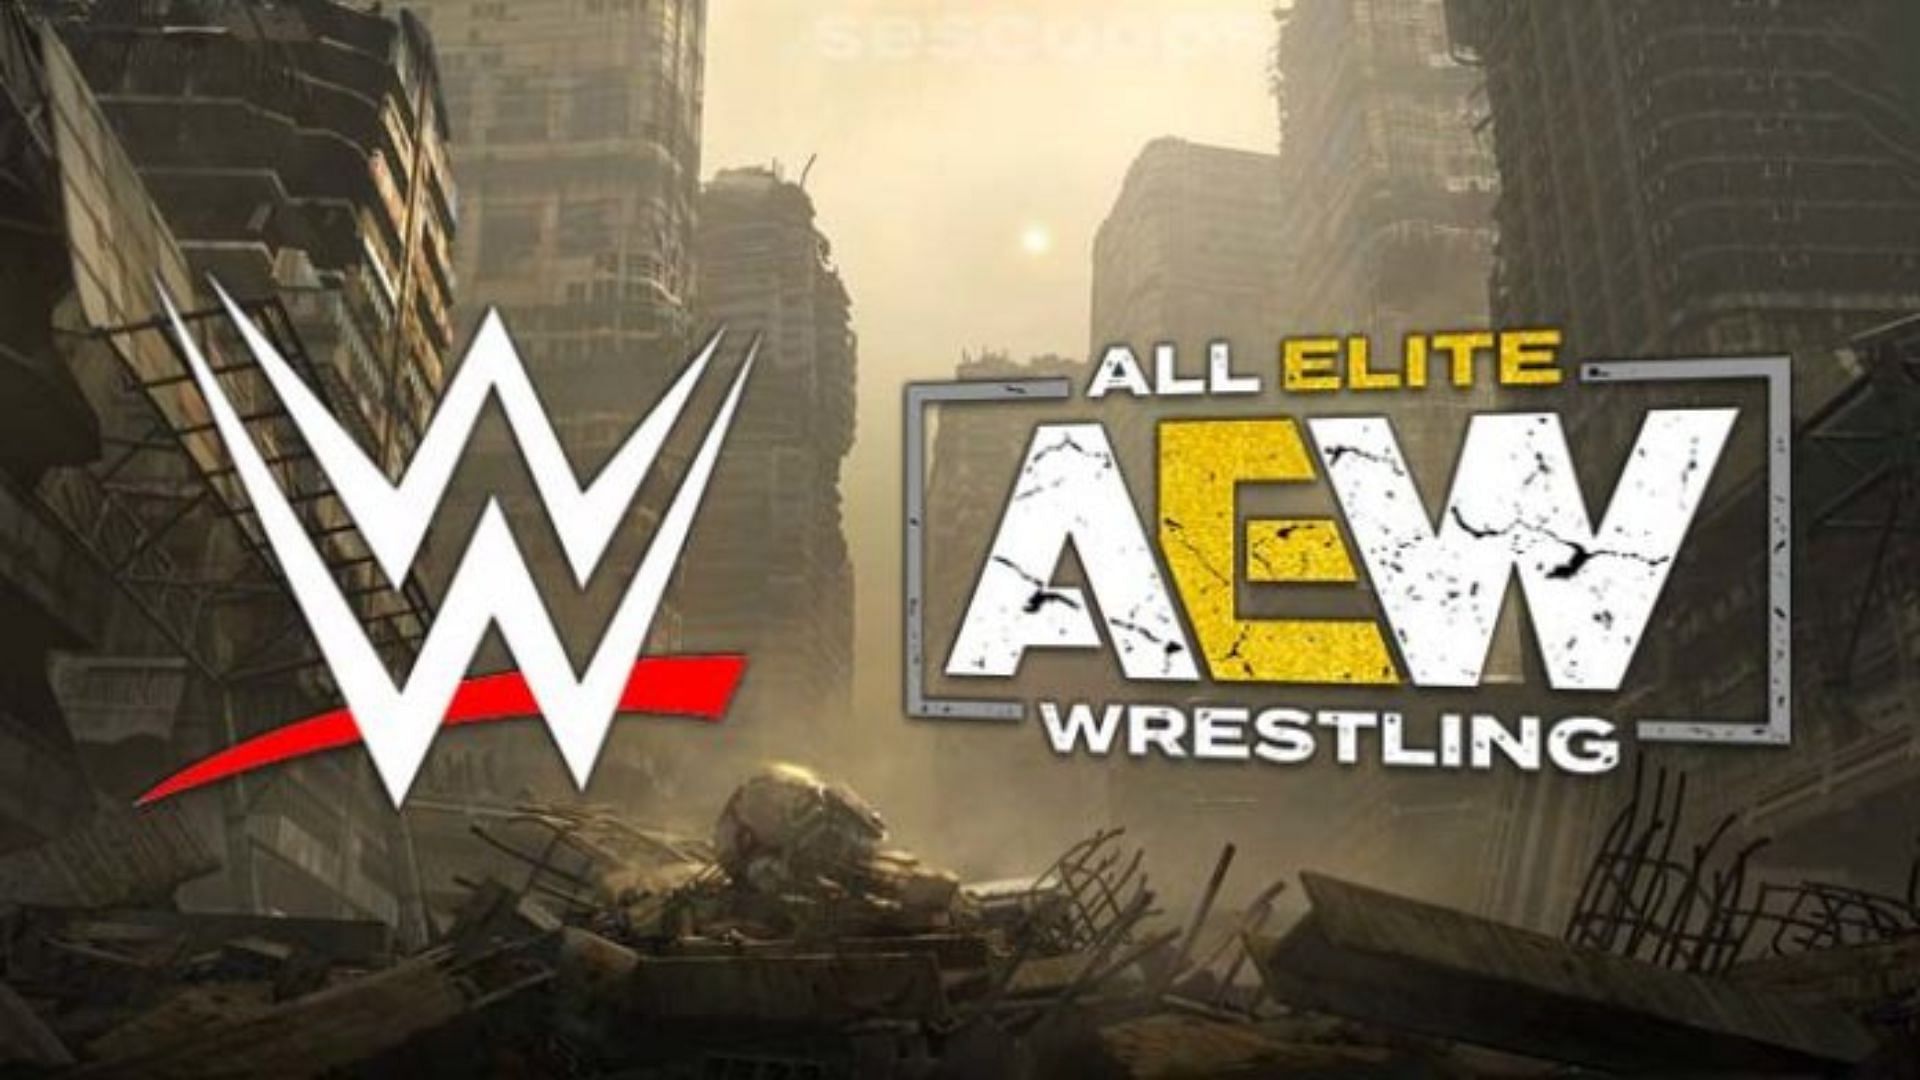 Which WWE veteran has left AEW?